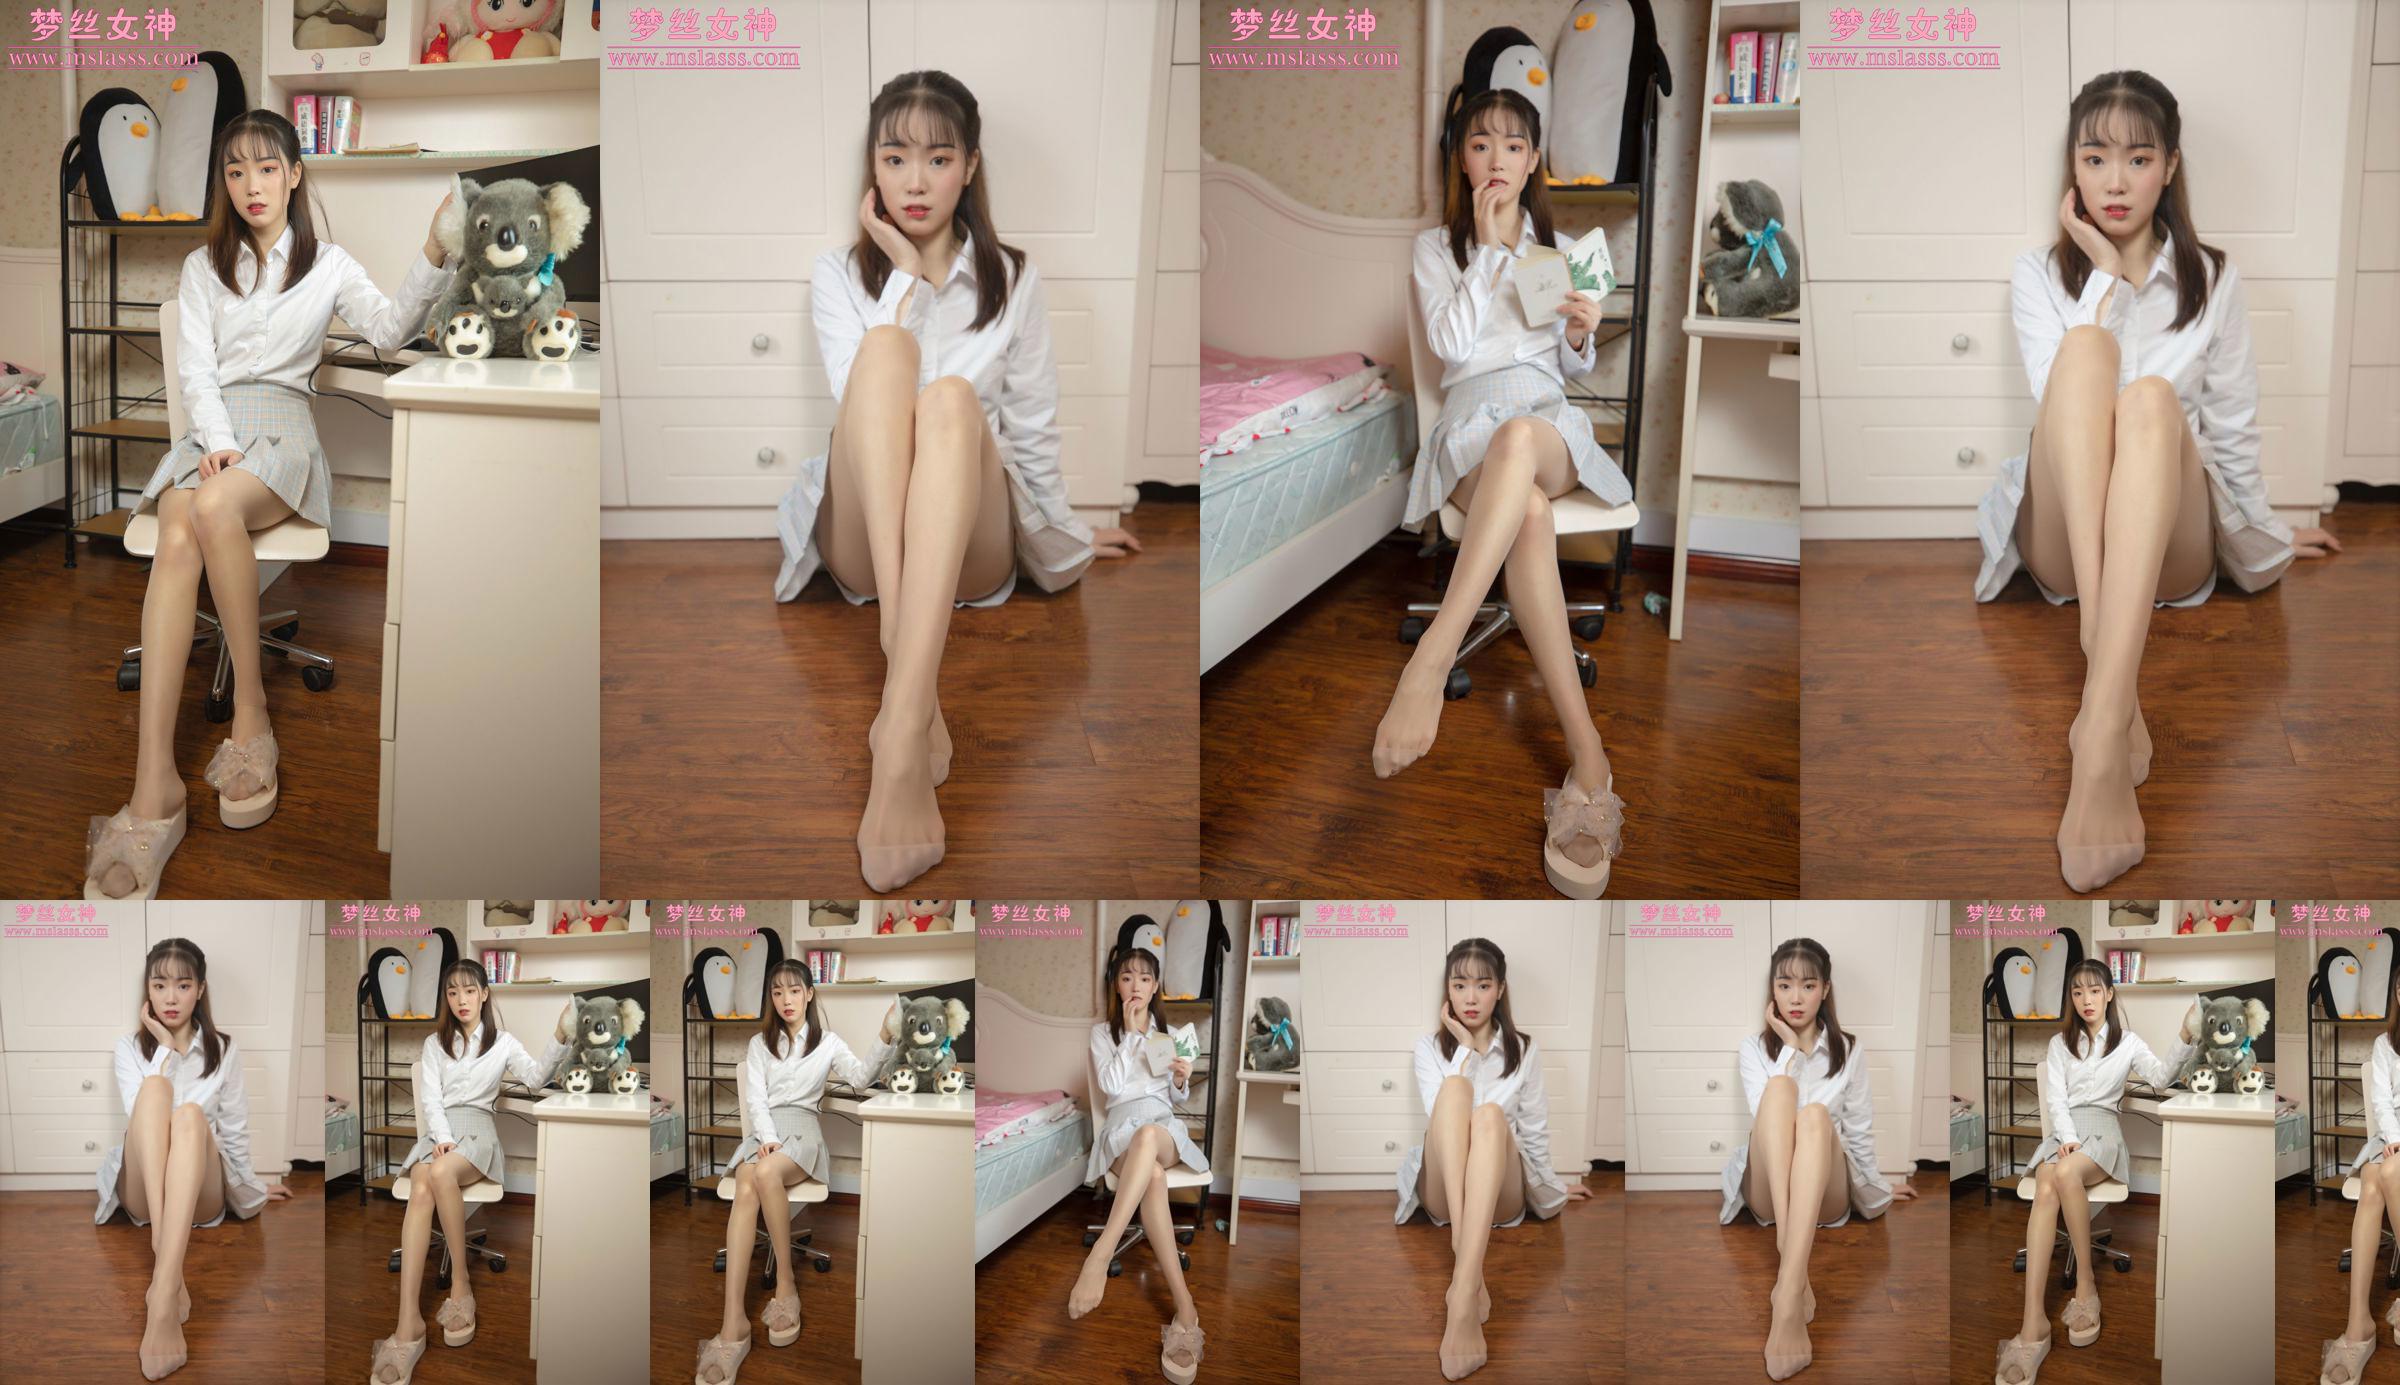 [MSLASS] Zhang Qiying new model goddess No.66dbaa Page 3